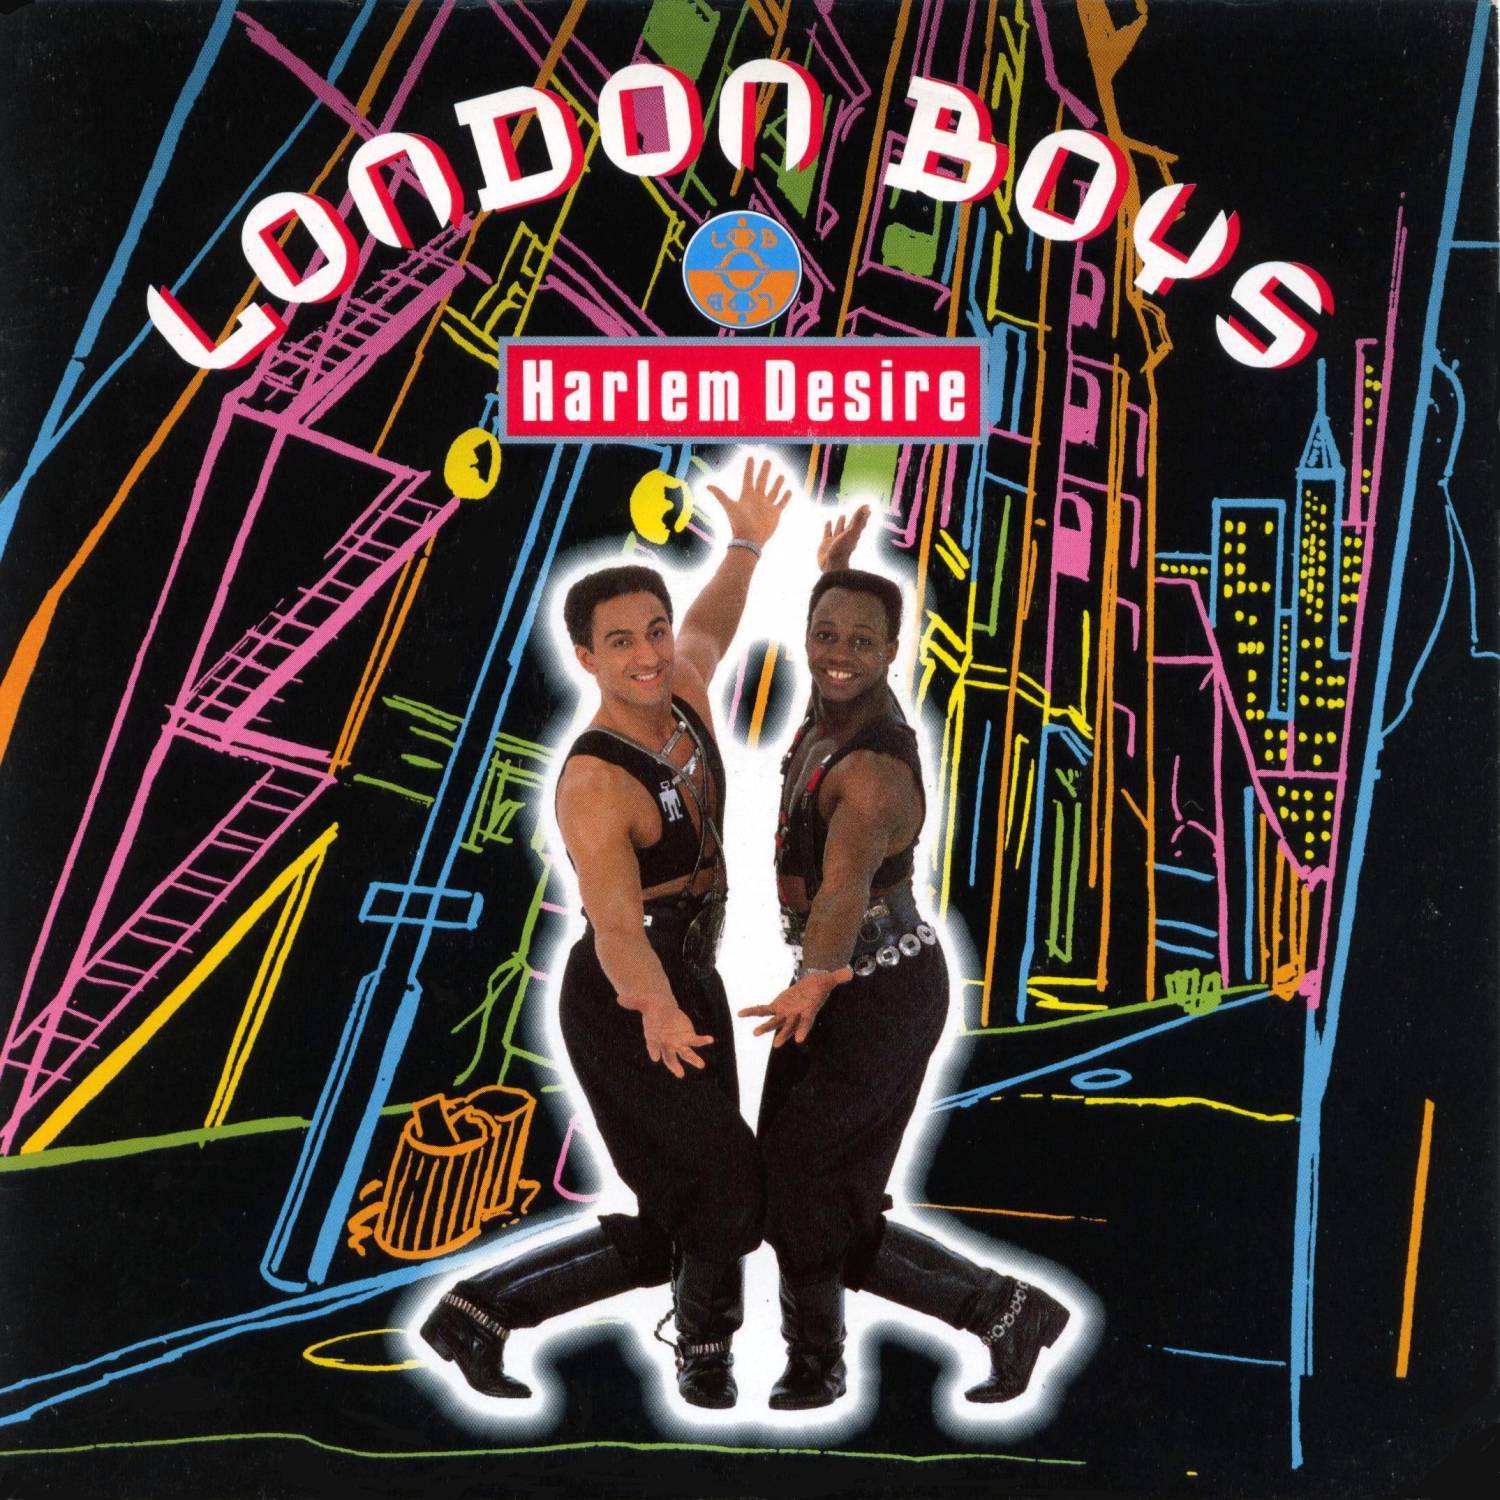  London Boys - Harlem Desire (1989) EP